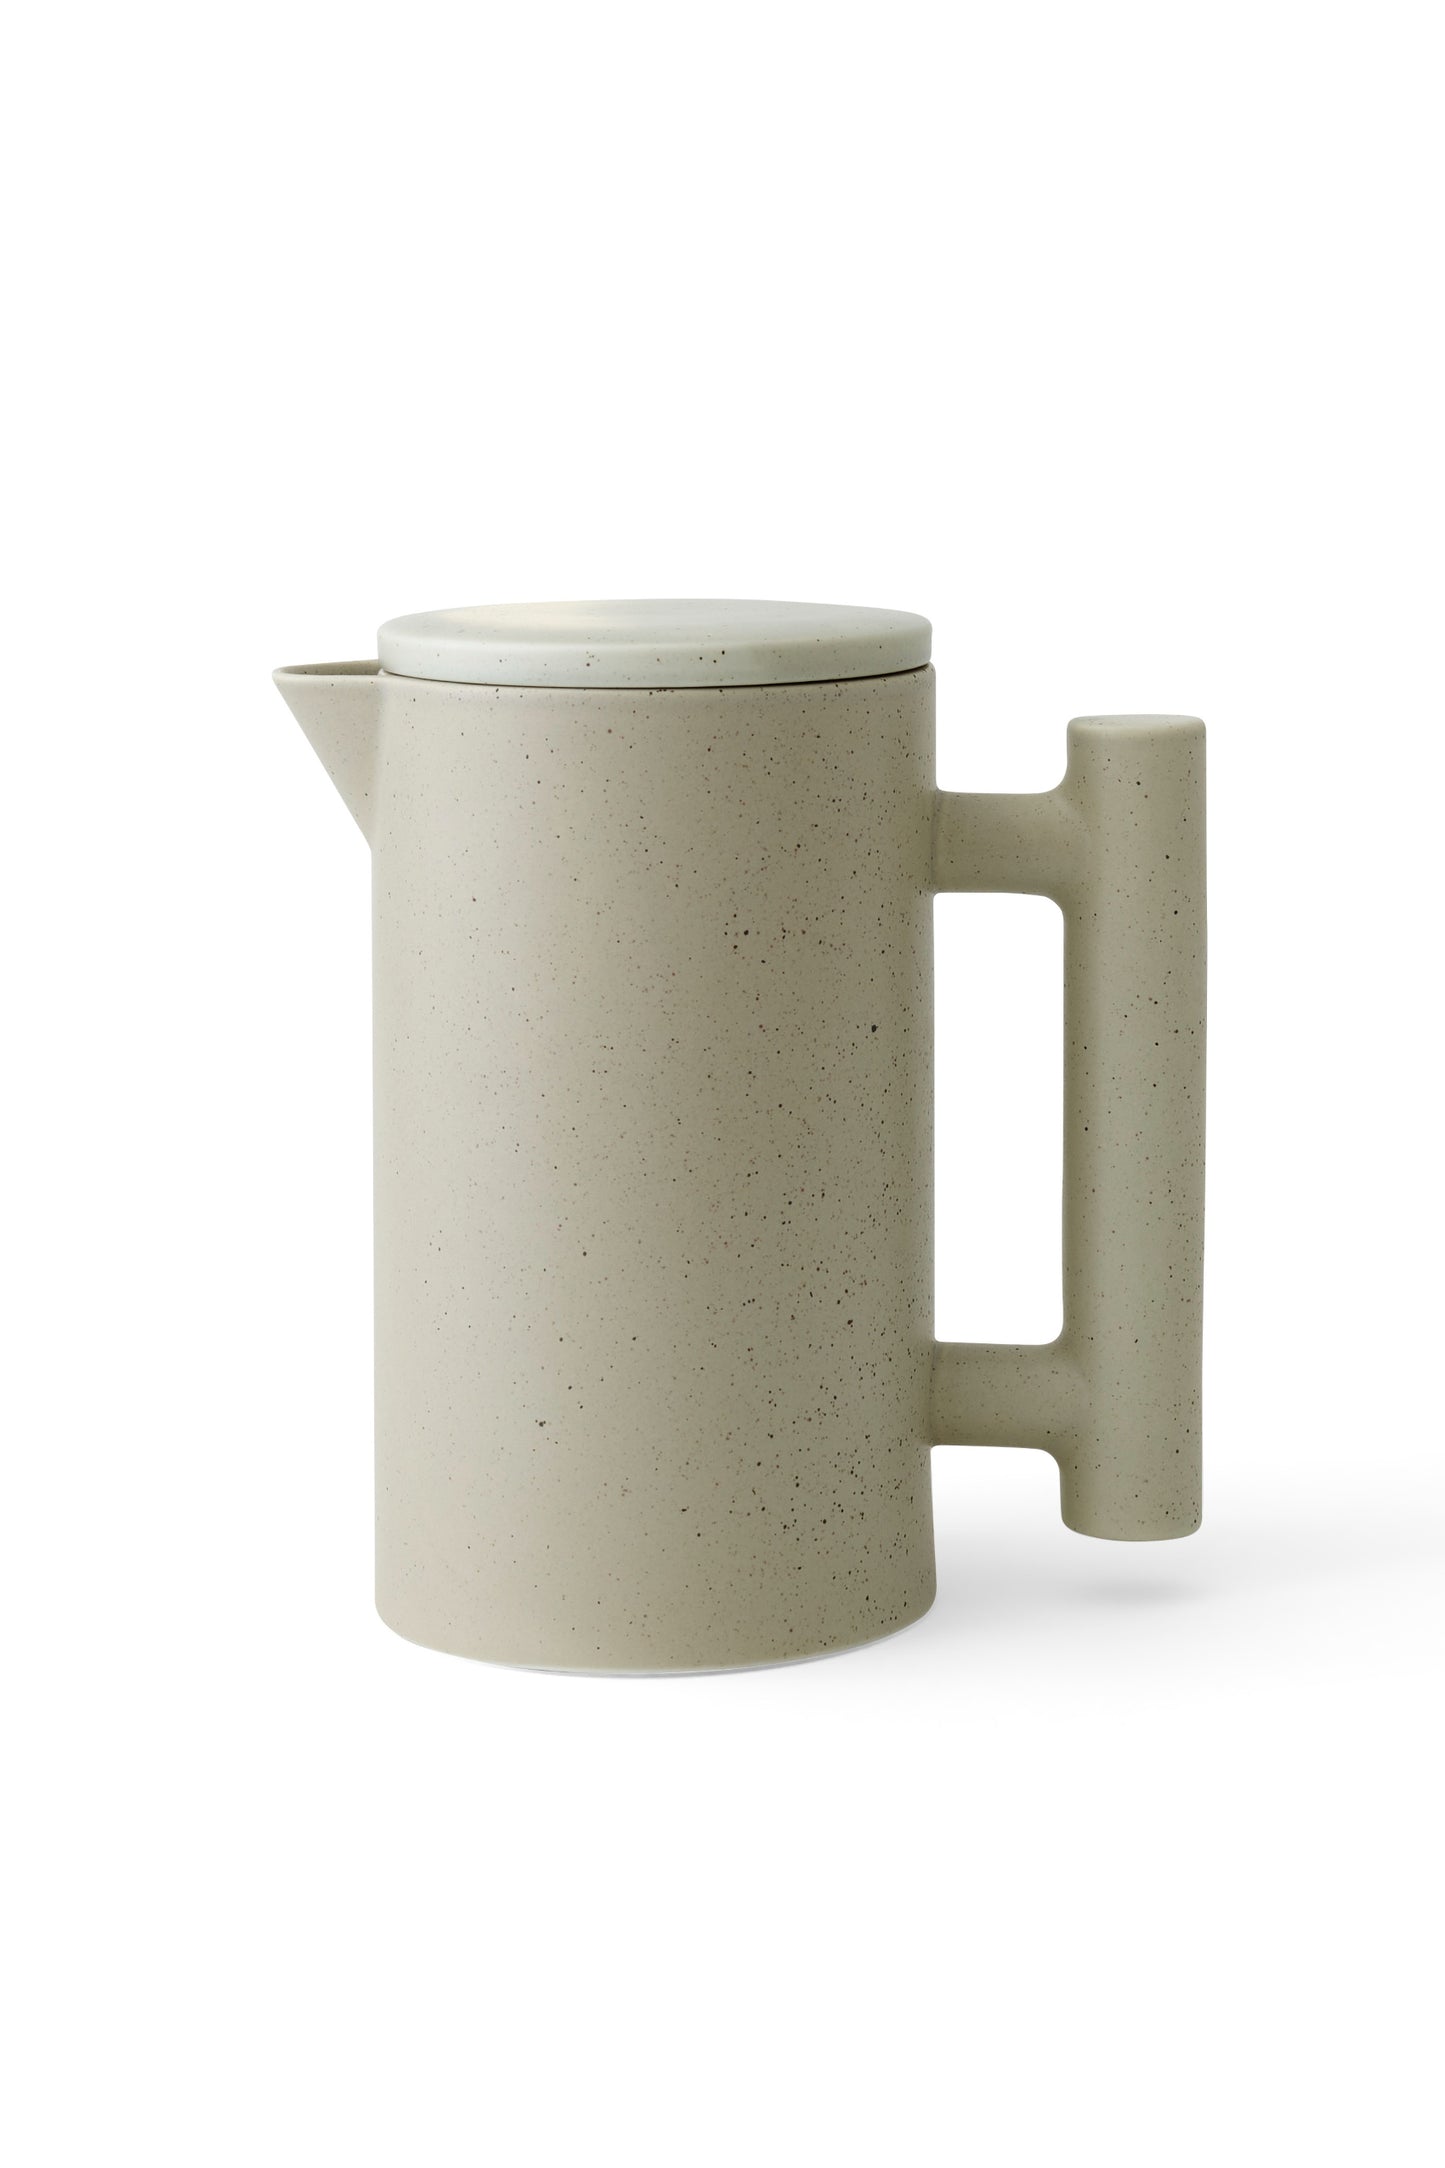 Tea coffee brewing pot ceramic speckled grey minimal look